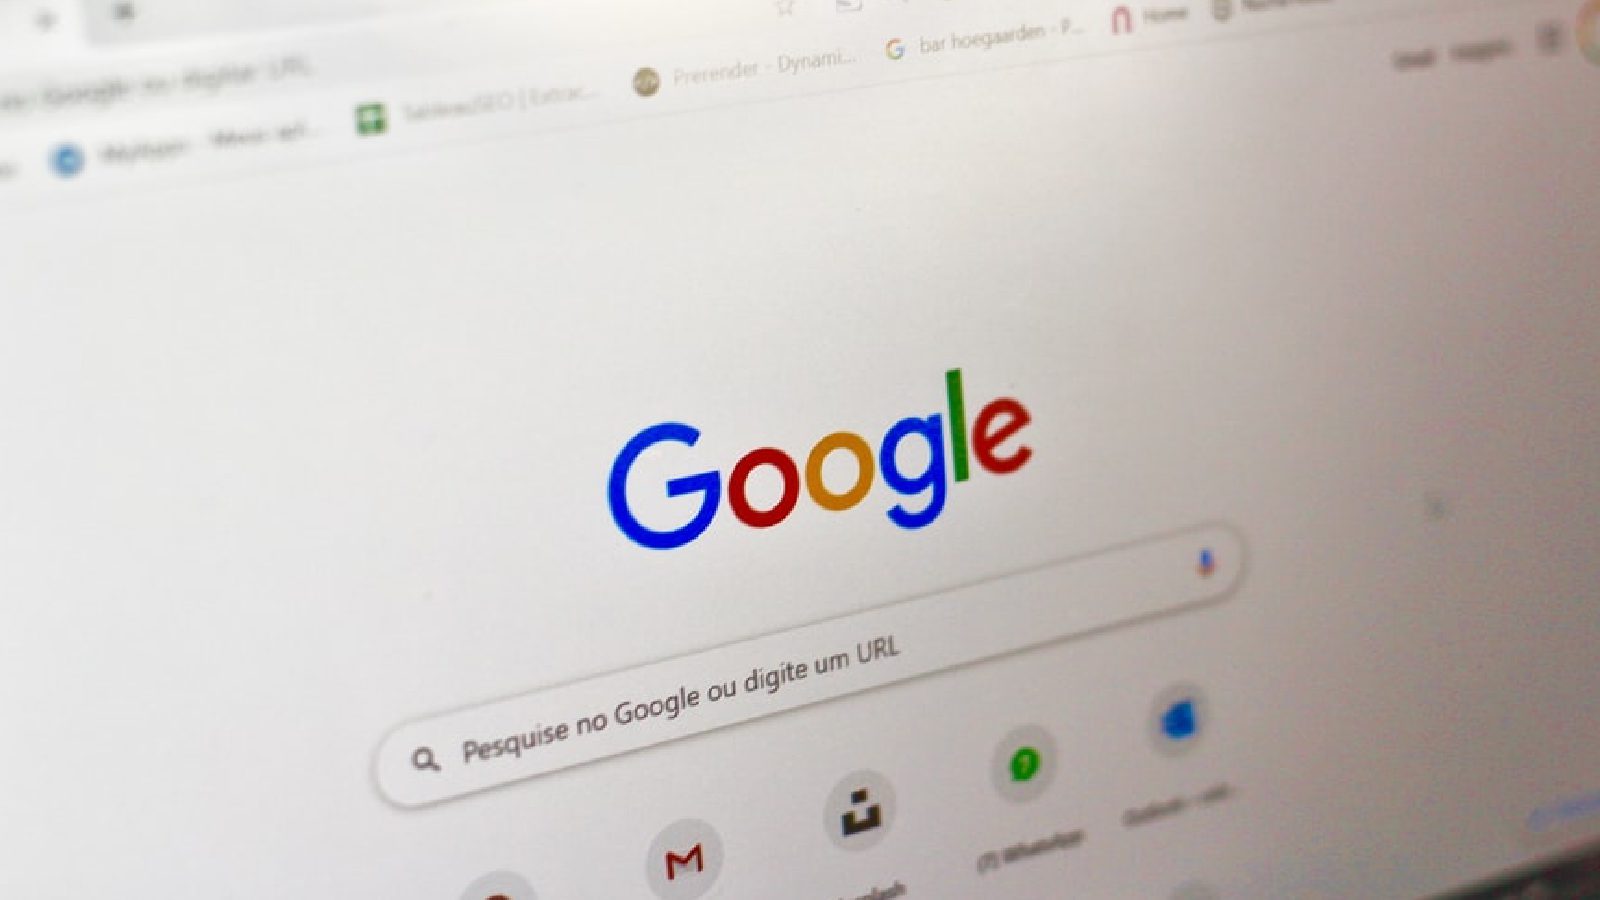 Default Google Search